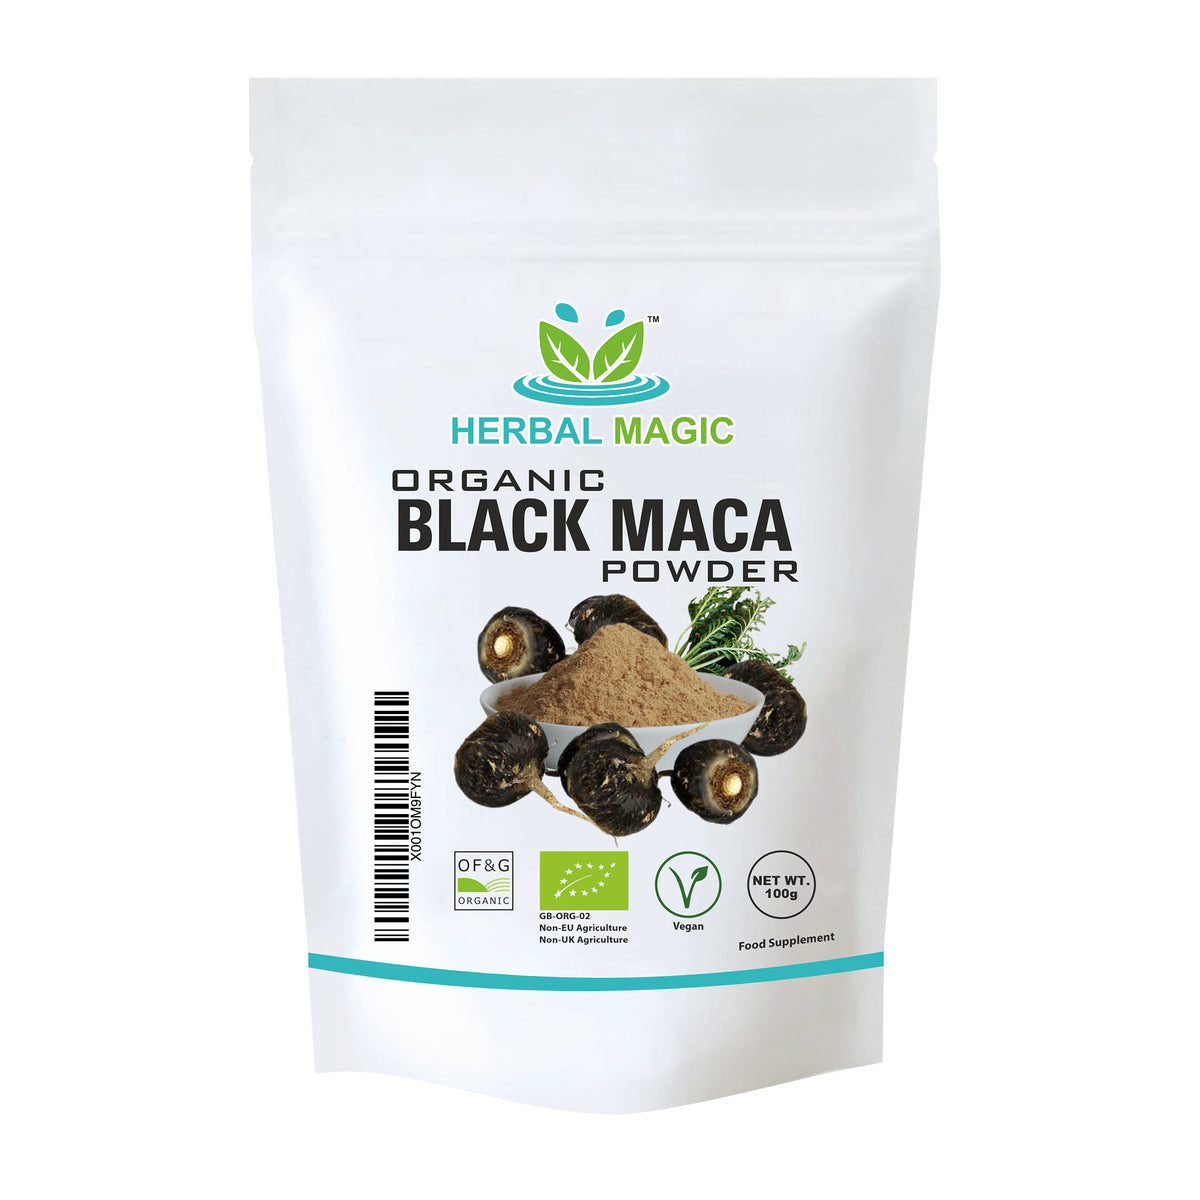 Organic Black Maca Powder